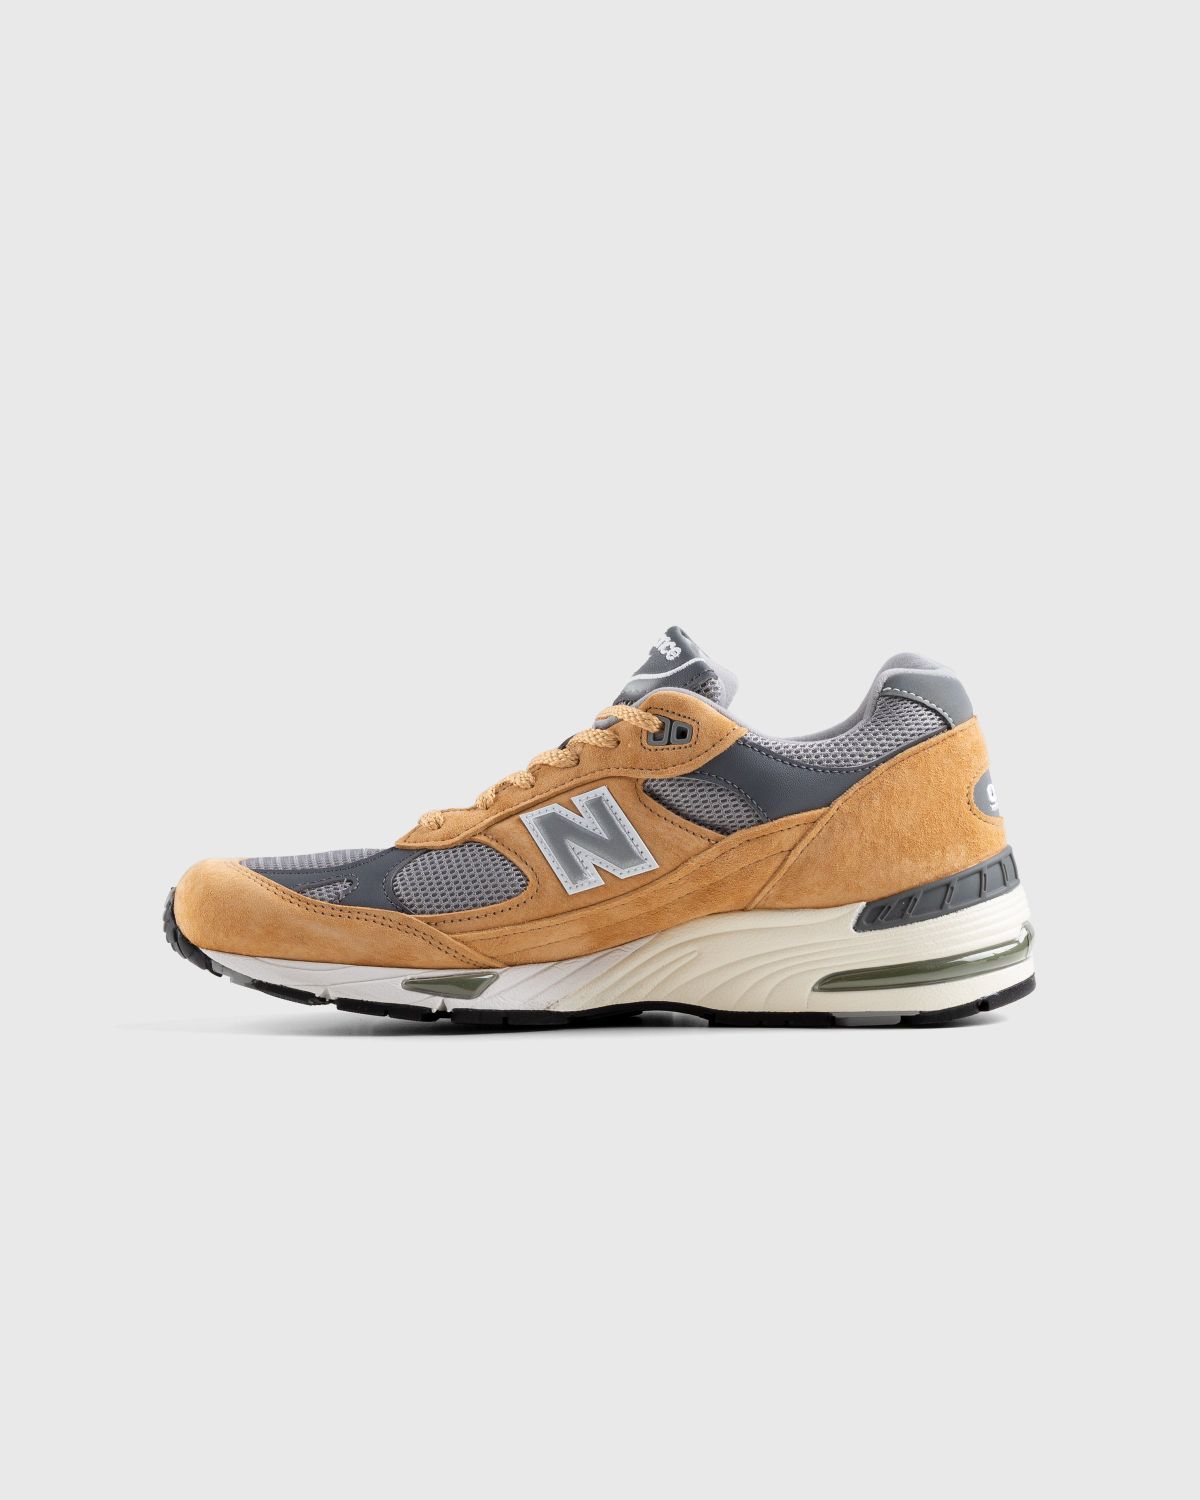 New Balance – M991TGG Tan/Grey - Low Top Sneakers - Brown - Image 2